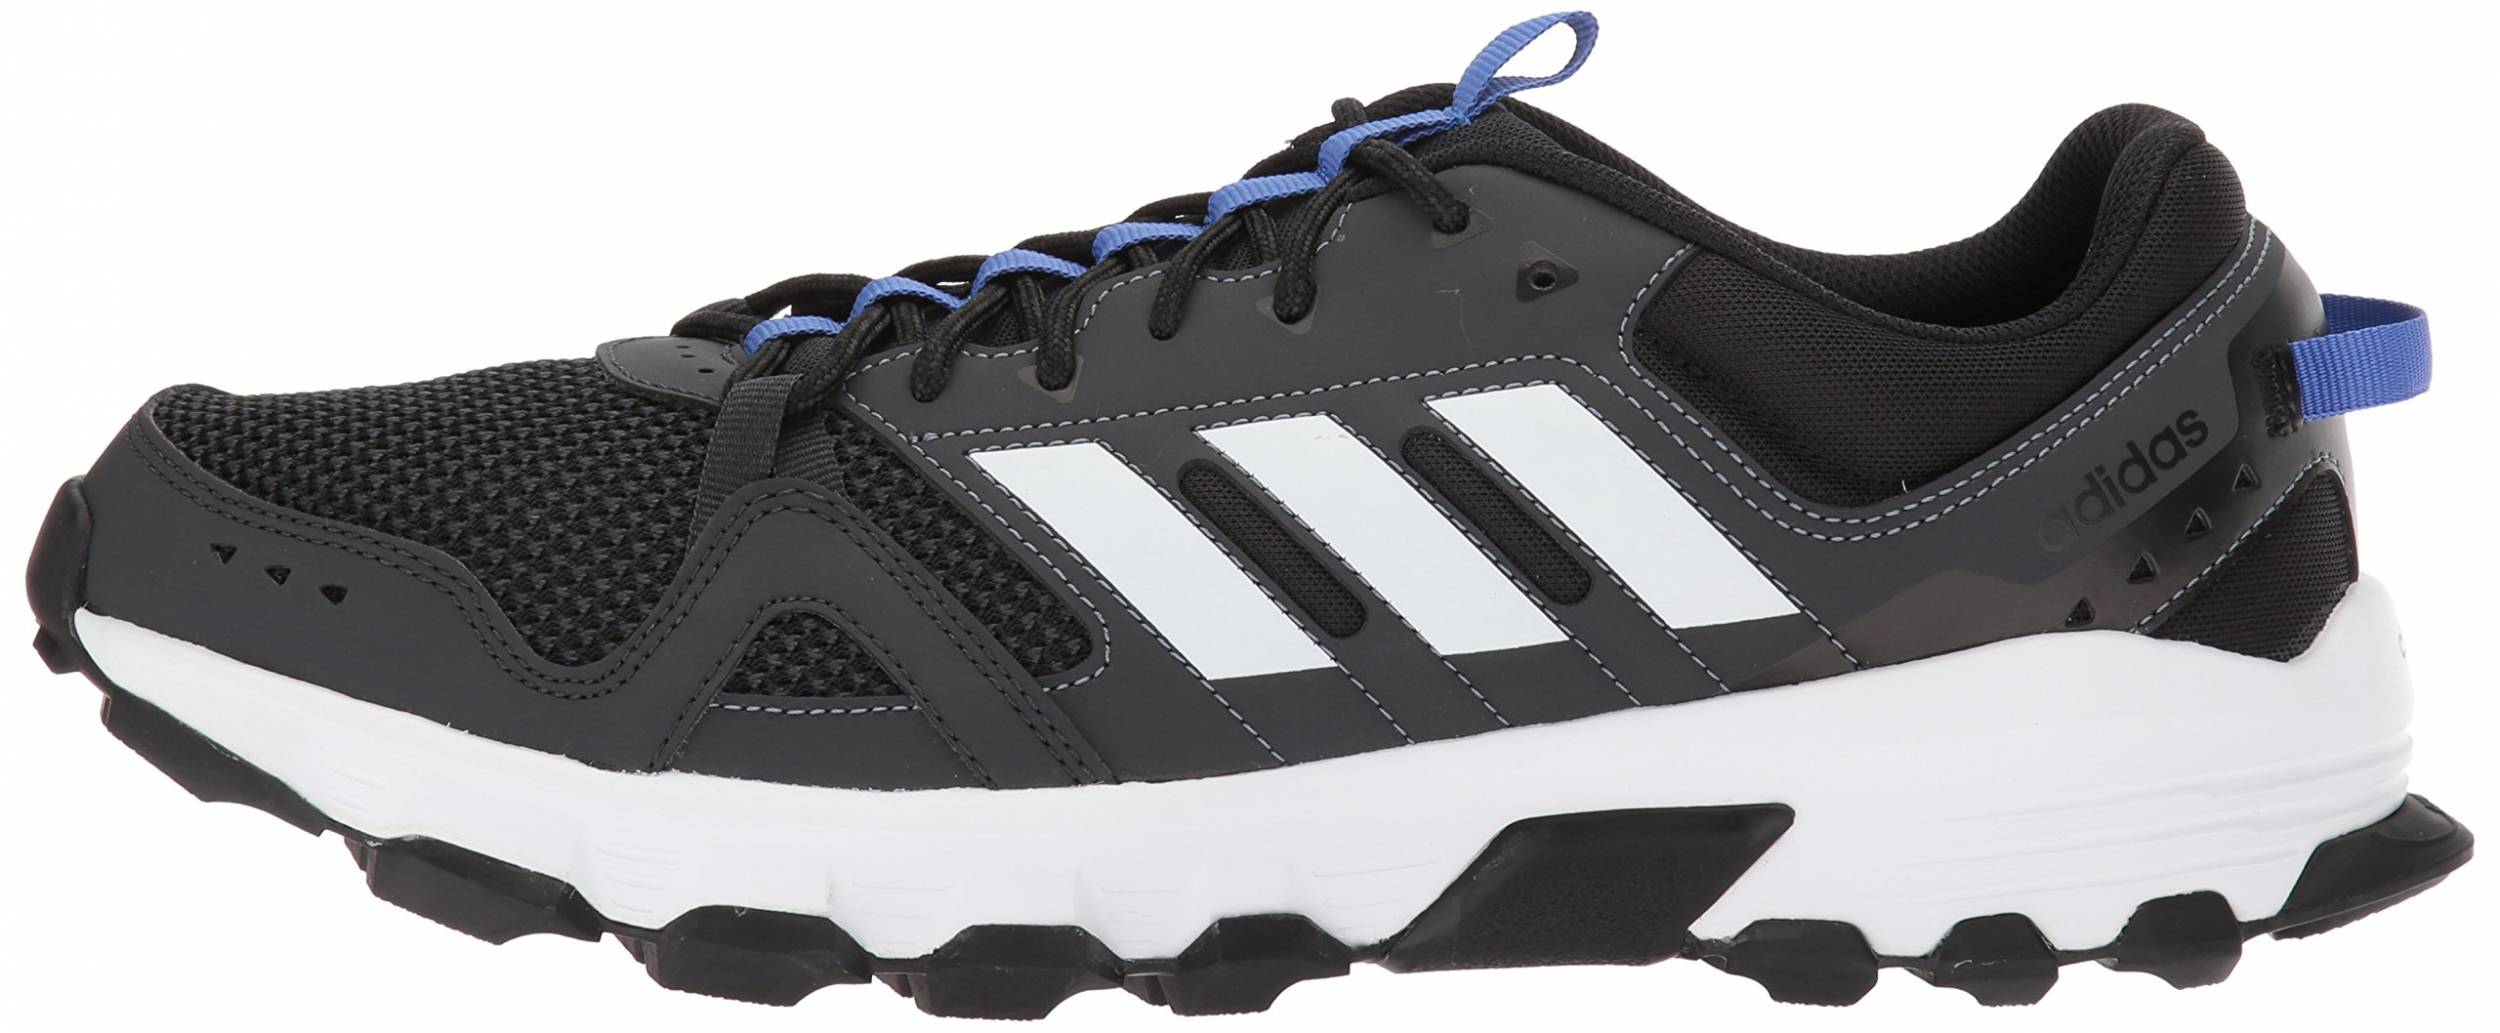 adidas men's rockadia trail running shoes